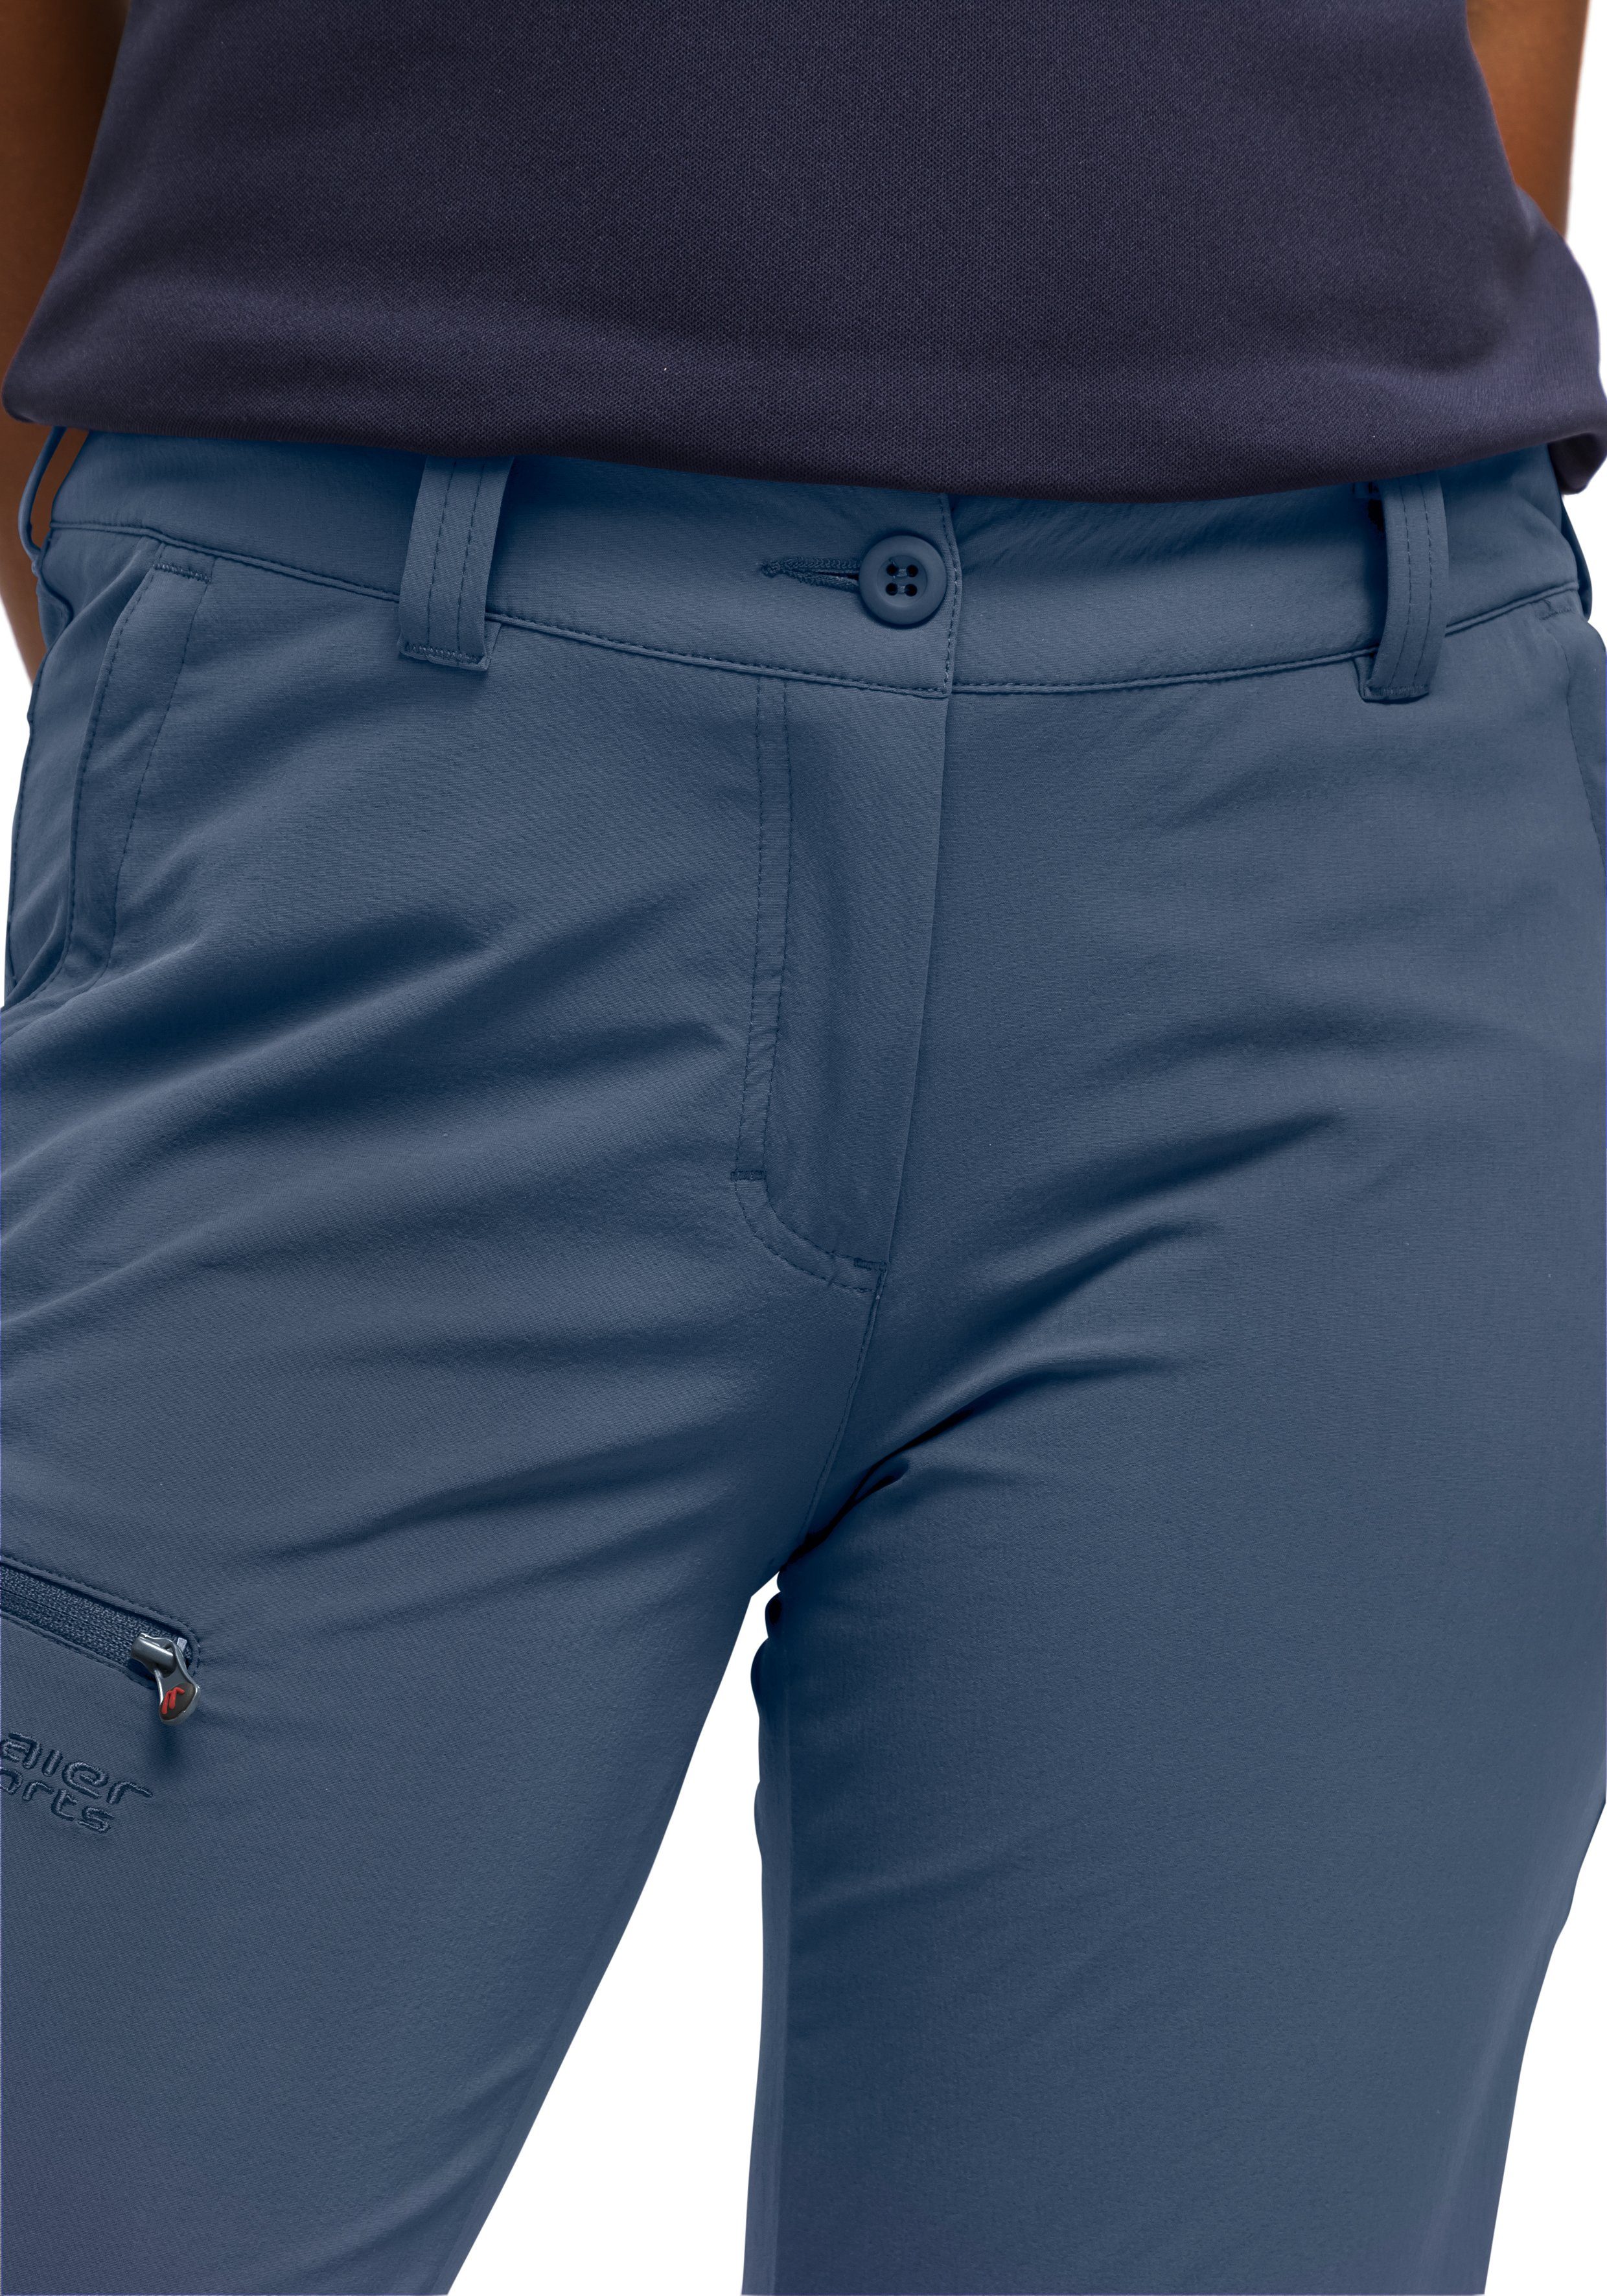 slim Wanderhose, Maier Inara Damen Sports Outdoor-Hose Funktionshose jeansblau aus elastischem Material